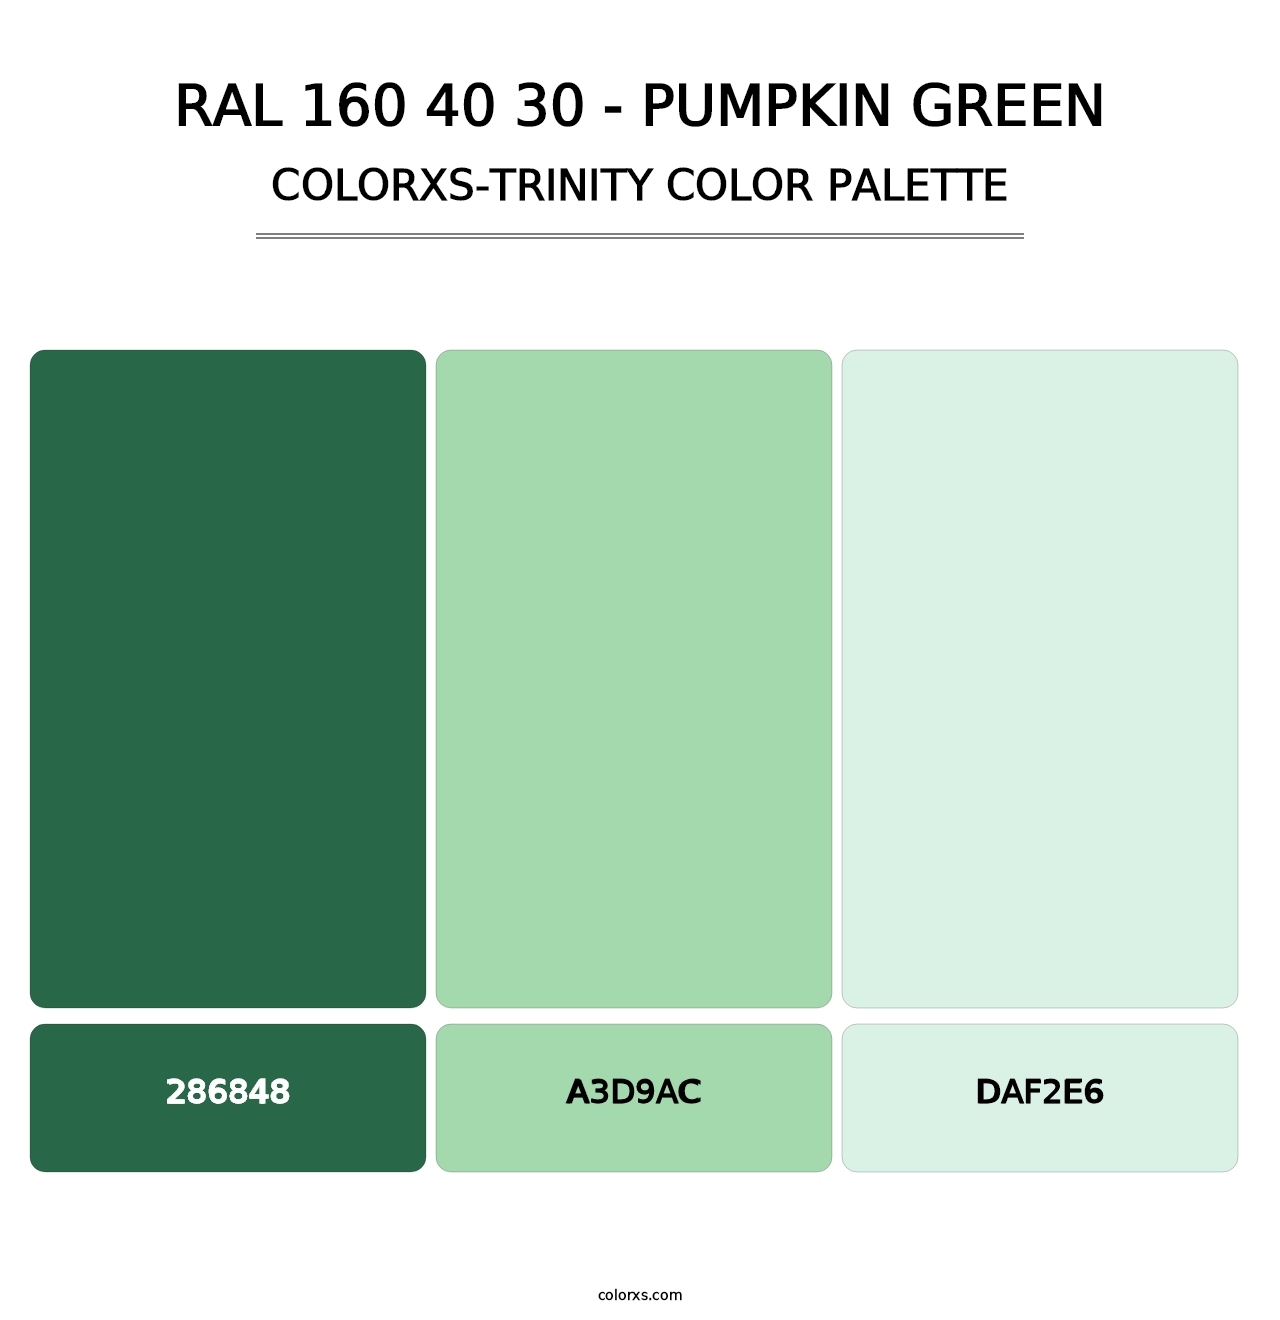 RAL 160 40 30 - Pumpkin Green - Colorxs Trinity Palette